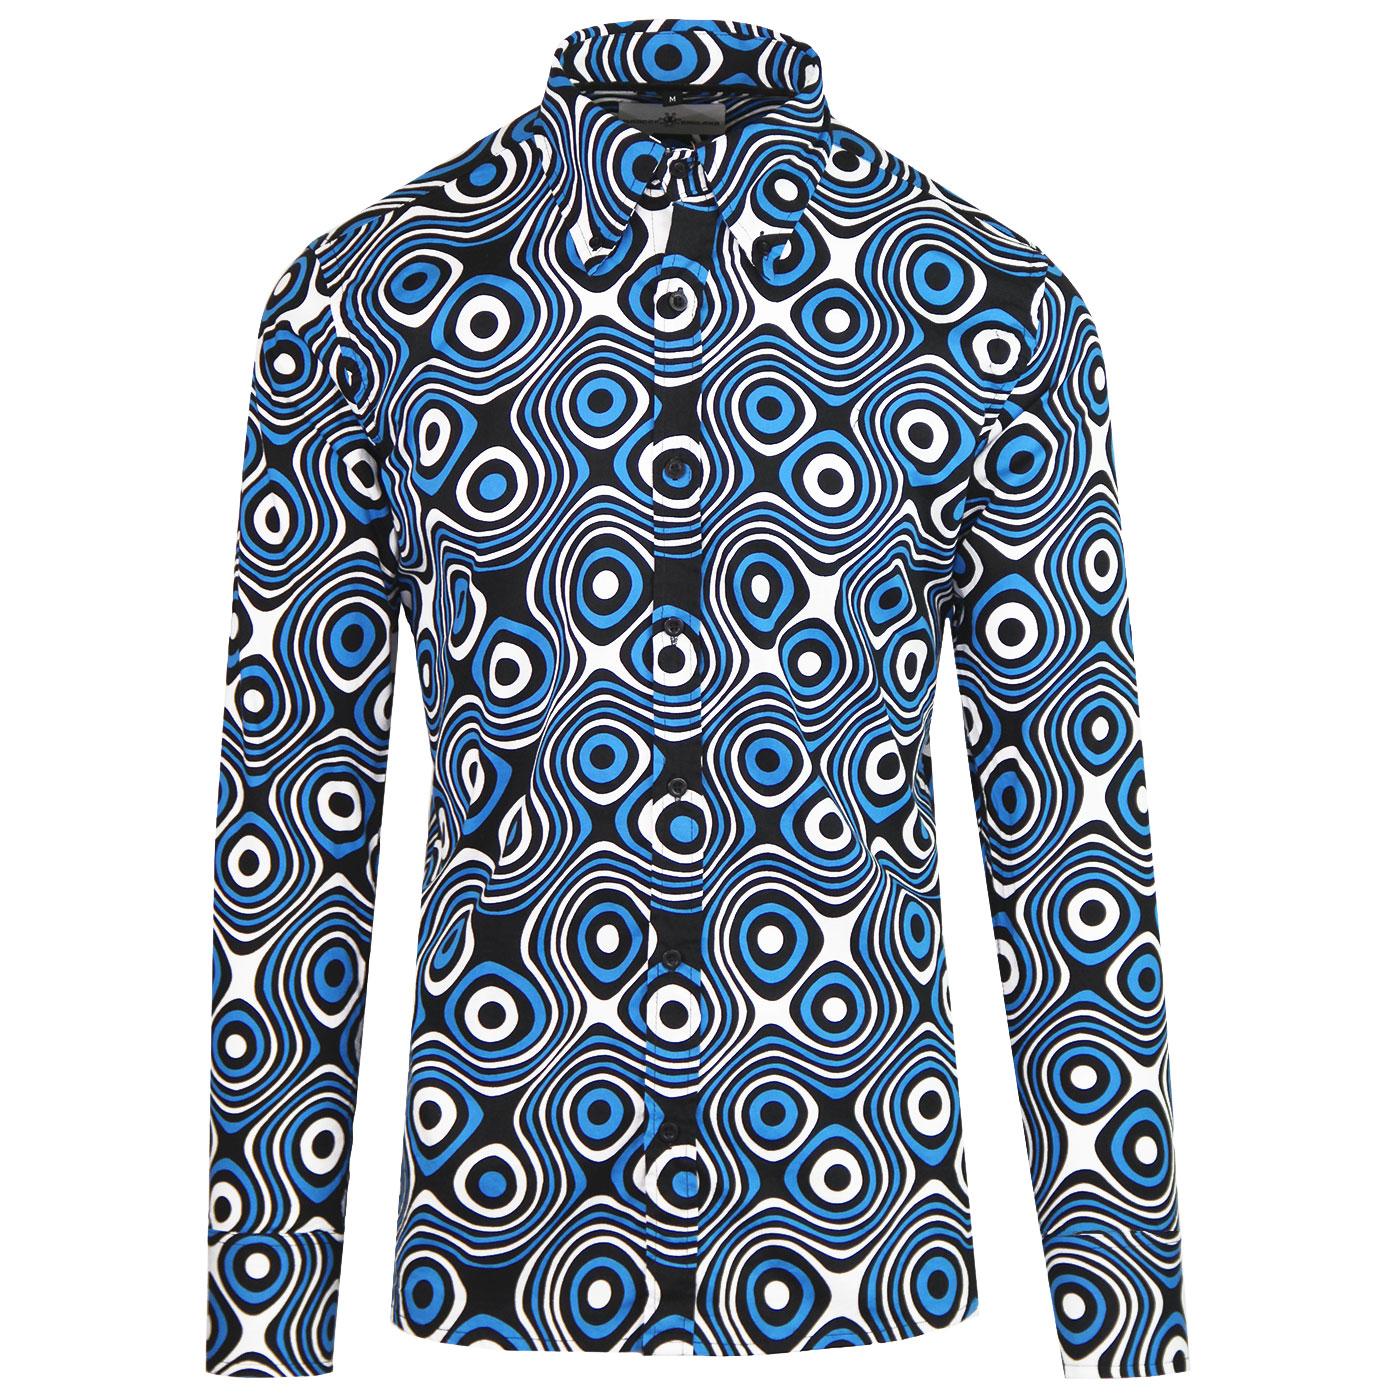 Size XL op art groovy 60's pattern  vintage shirt